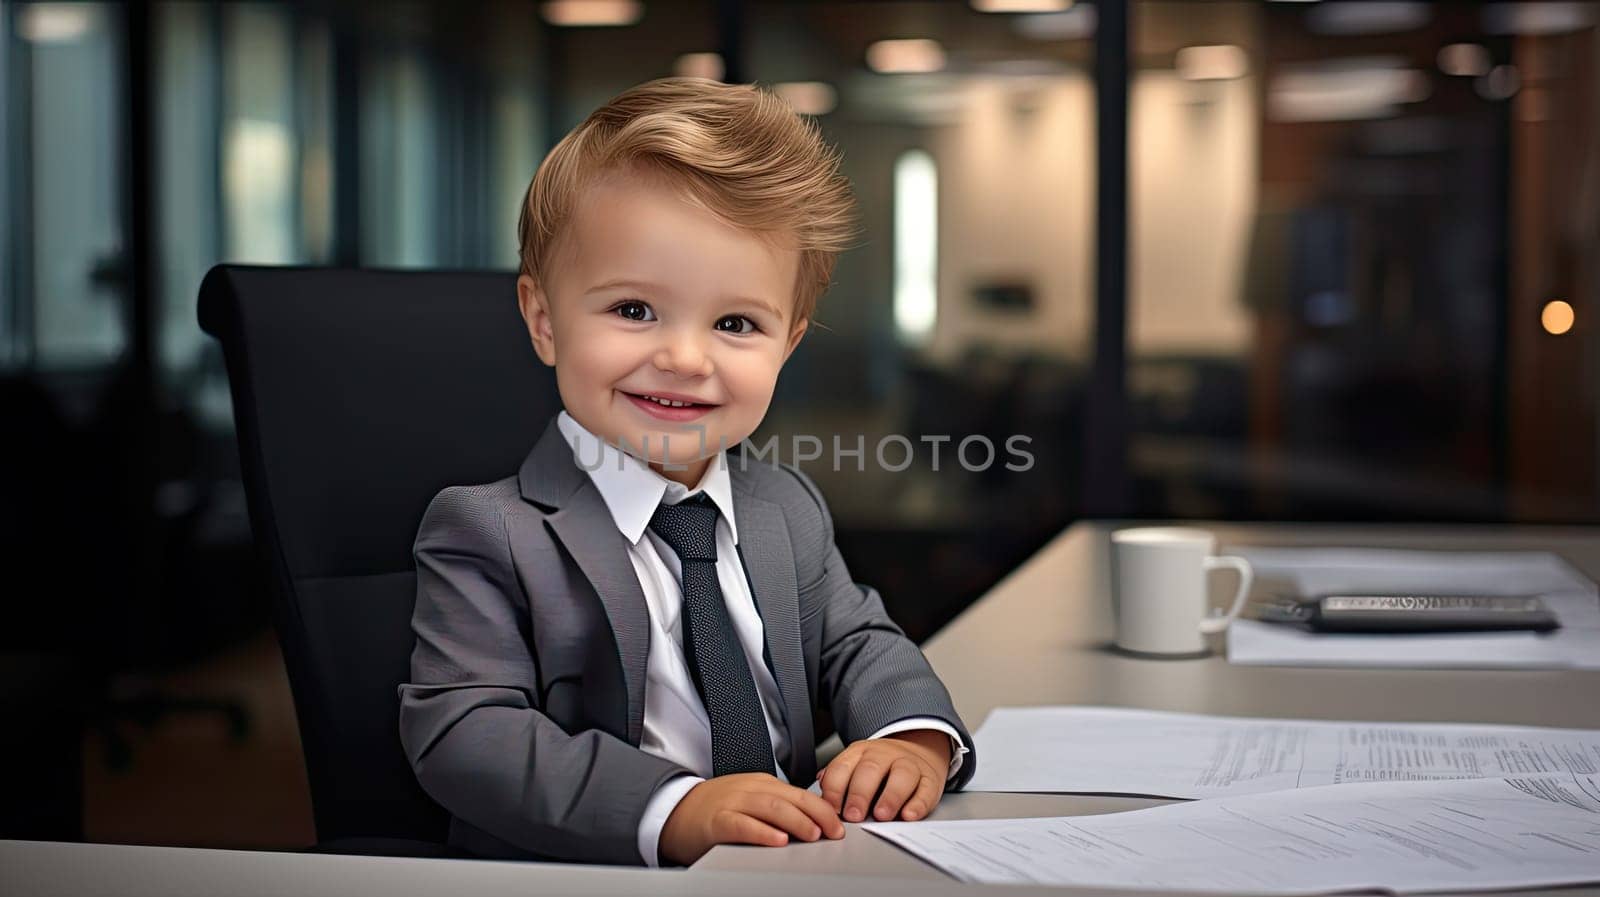 Cute business baby boy in suit working in office joyfully smiling by Kadula